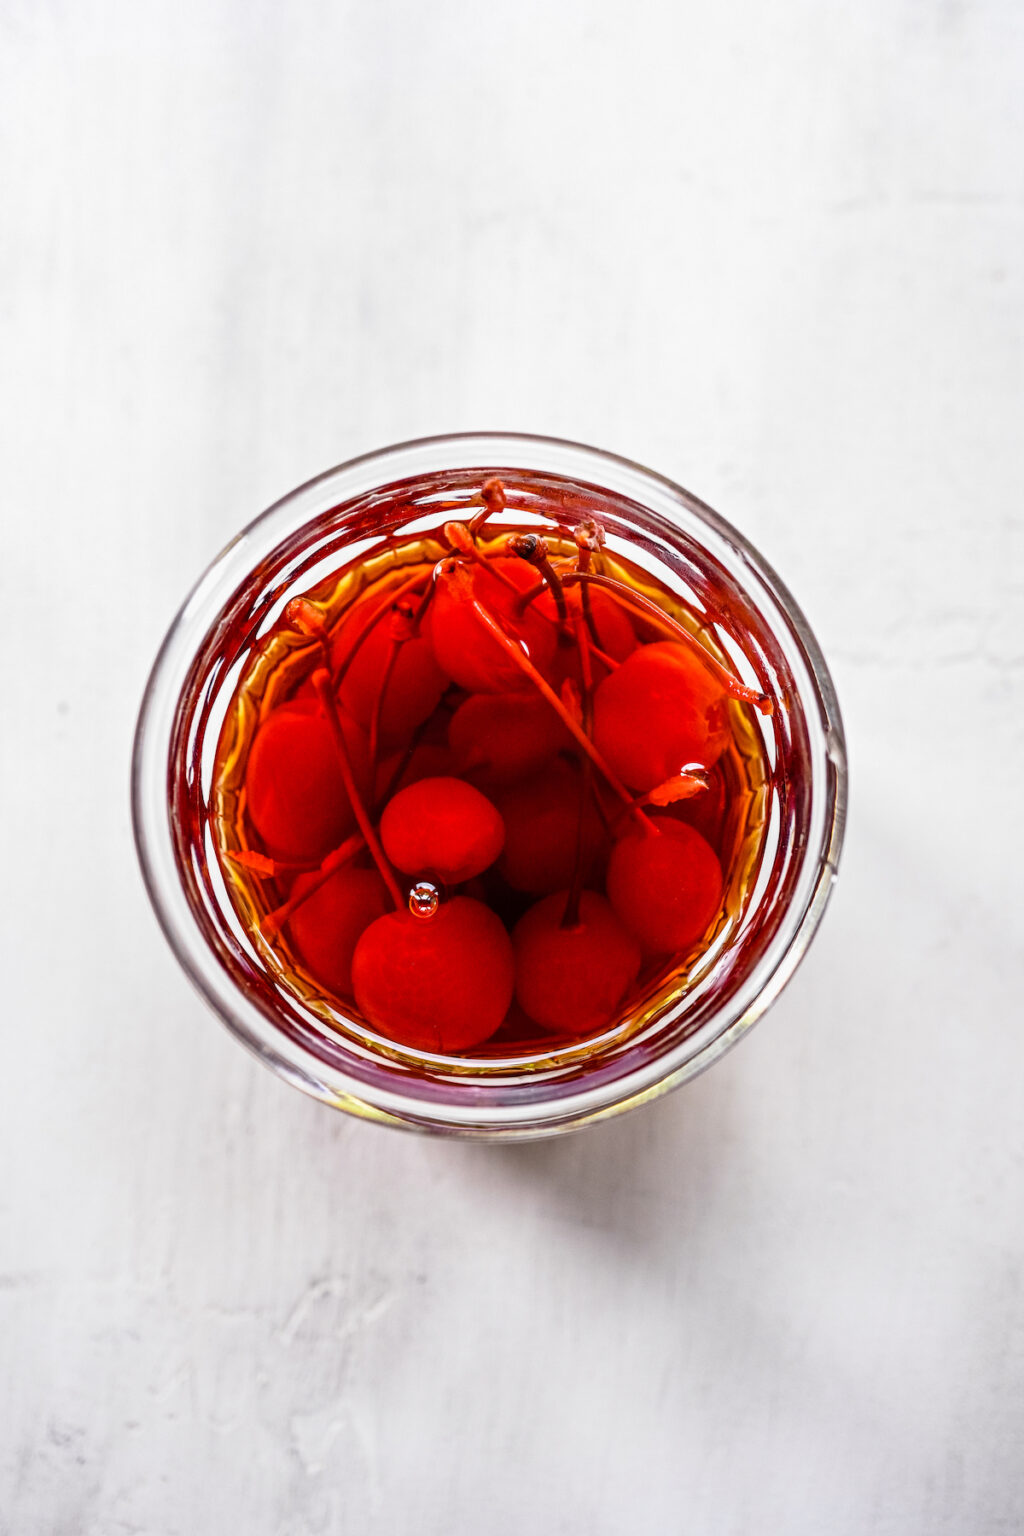 Drunken Cherries in Amaretto | The Novice Chef